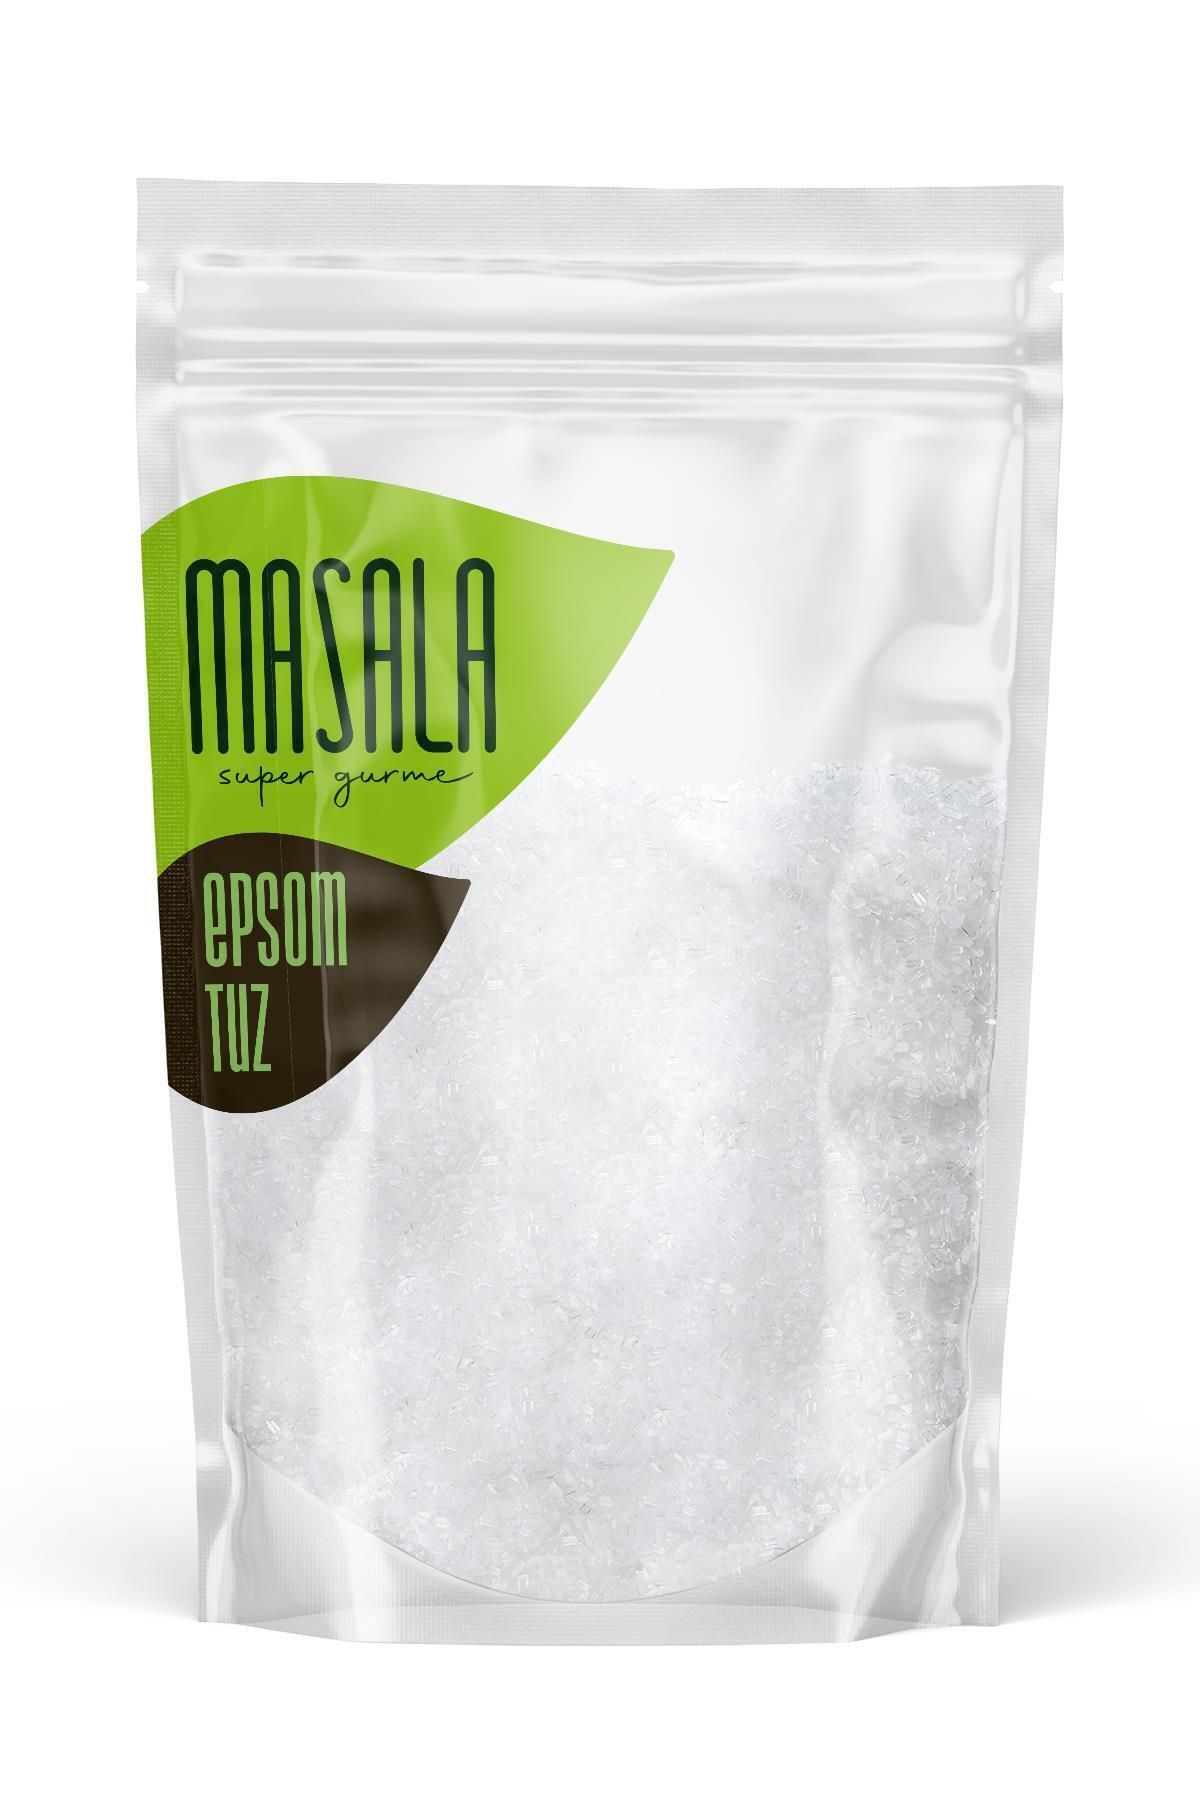 Super Gurme Masala Epsom Tuz 400 gr (İngiliz tuzu- magnezyum sülfat) magnesium sulfate